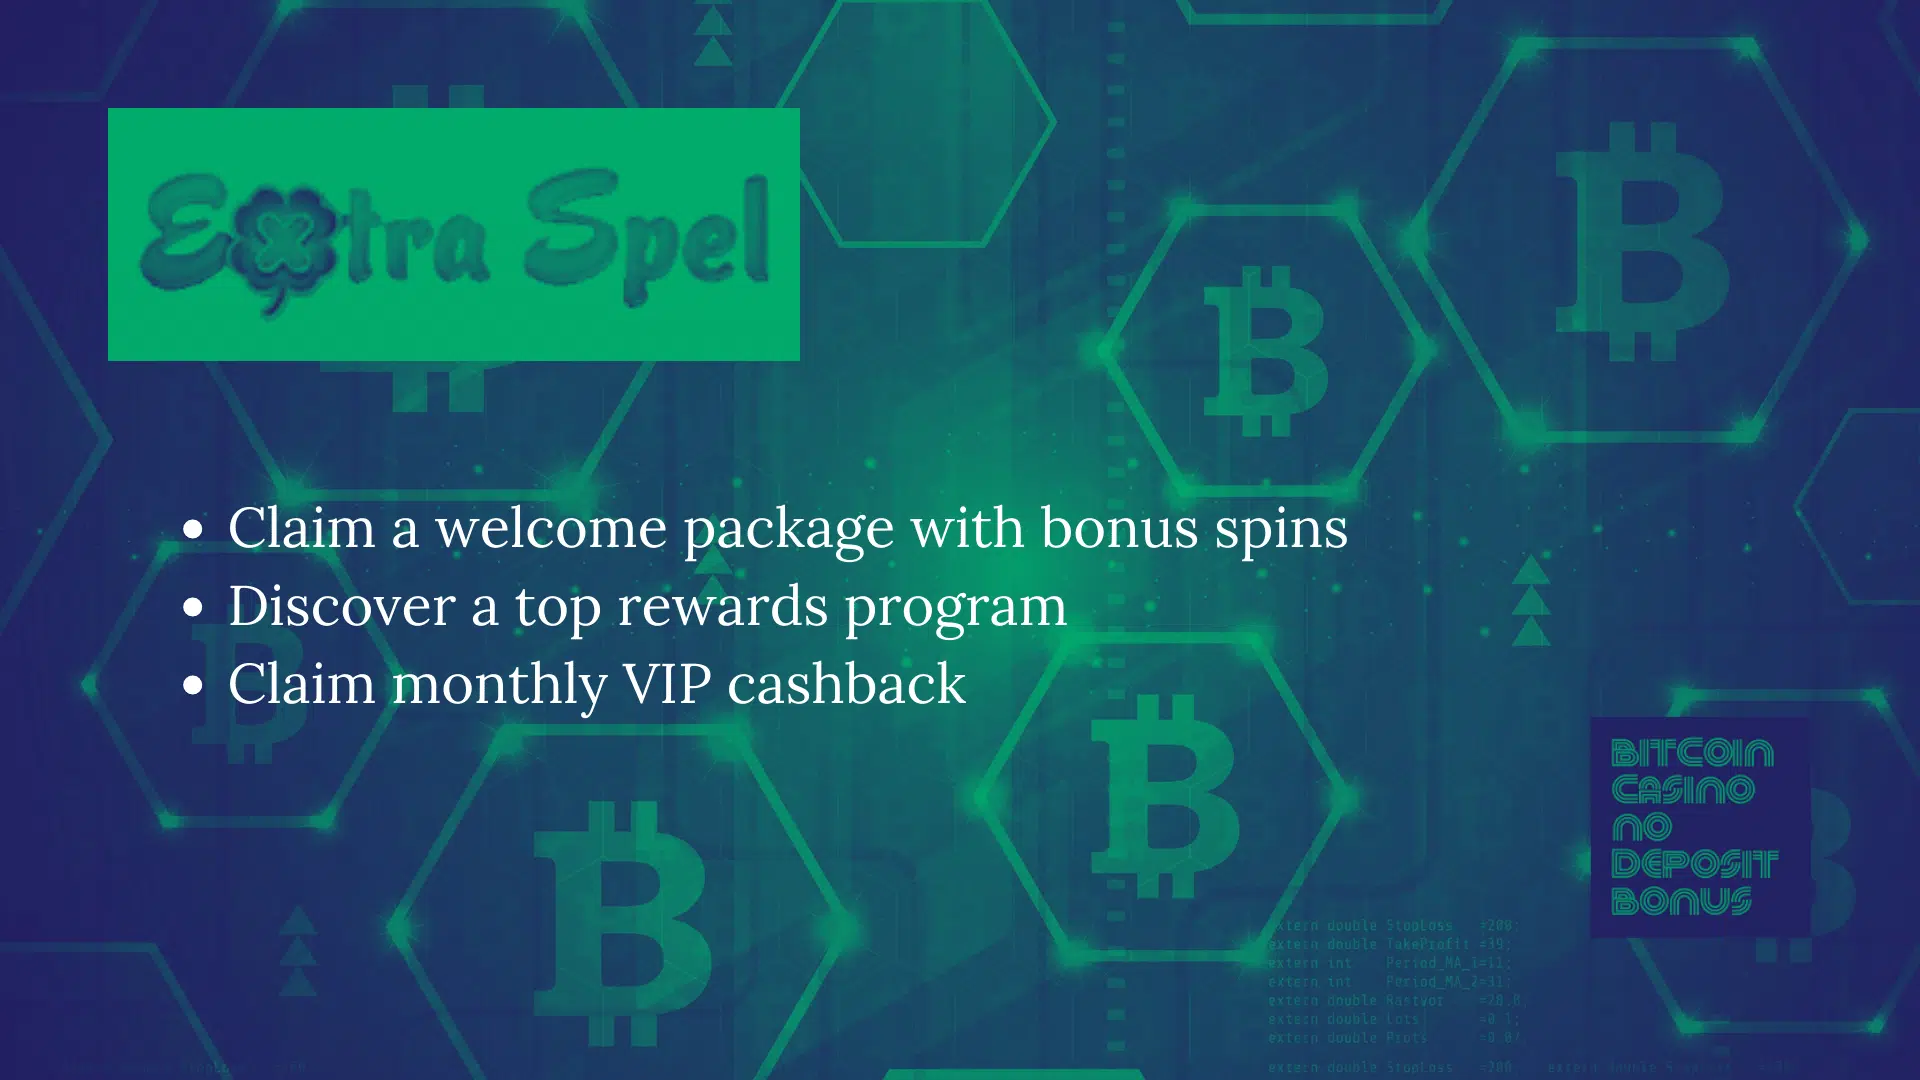 You are currently viewing Extraspel Casino Bonus Codes – Extraspel.com Free Spins December 2022